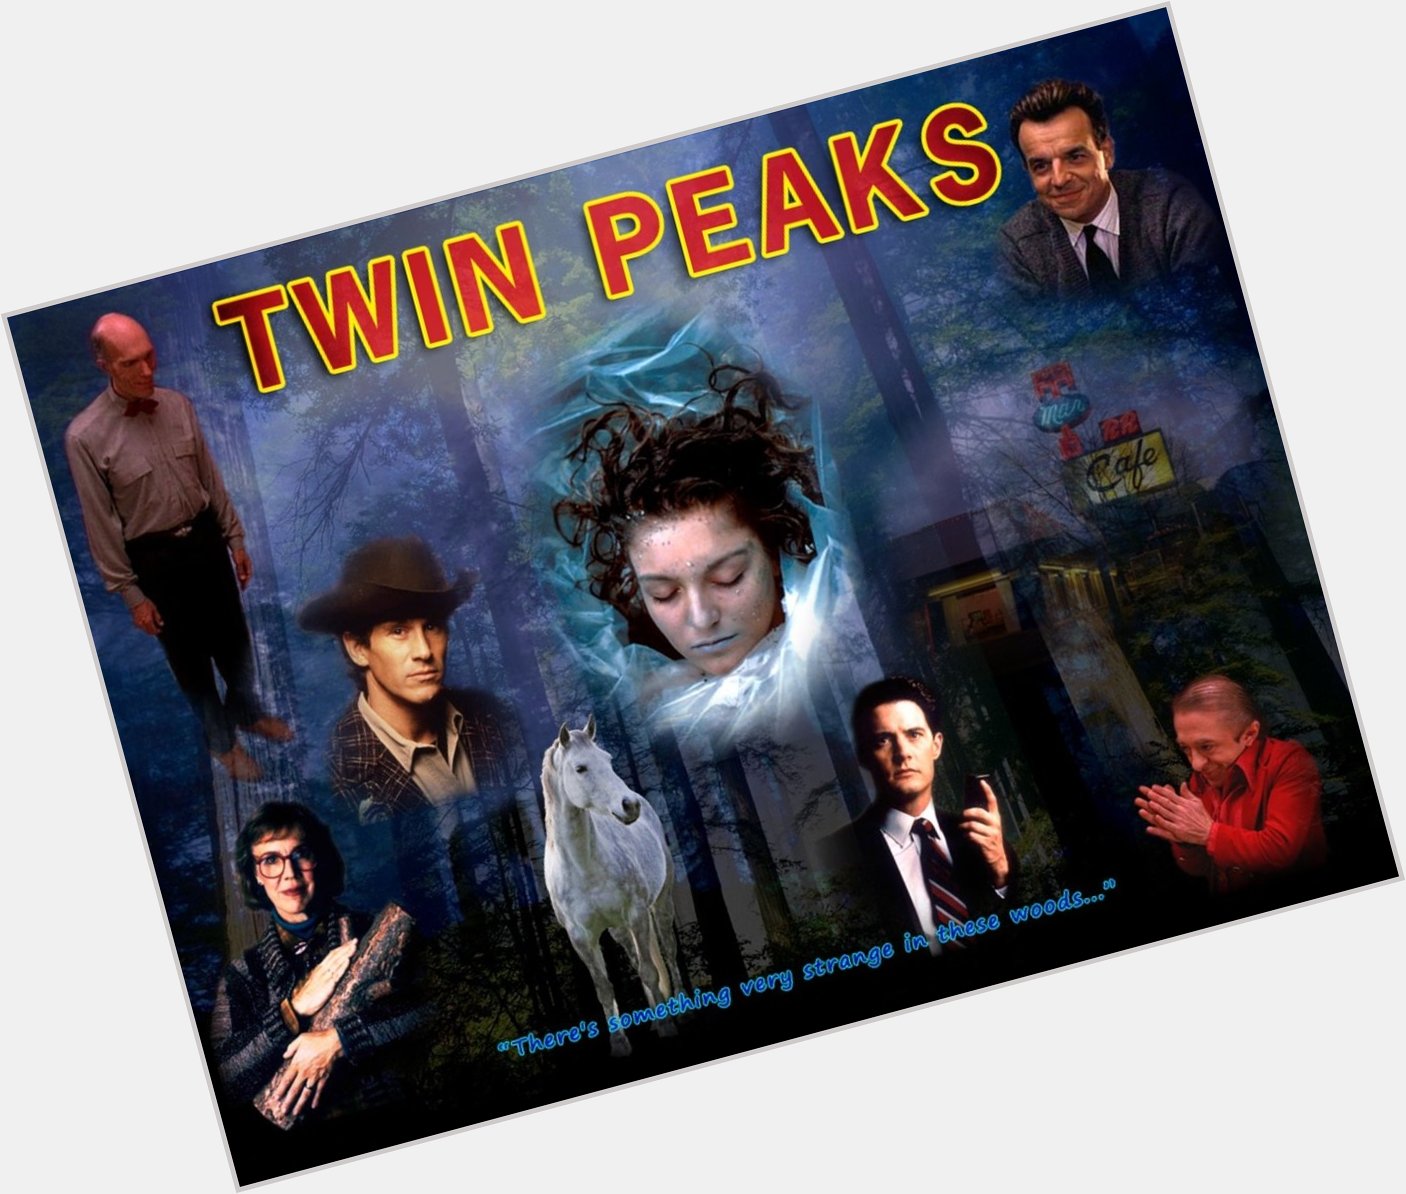 Twin Peaks - TV Series (1990 - 1991)
Happy Birthday, Ray Wise! 